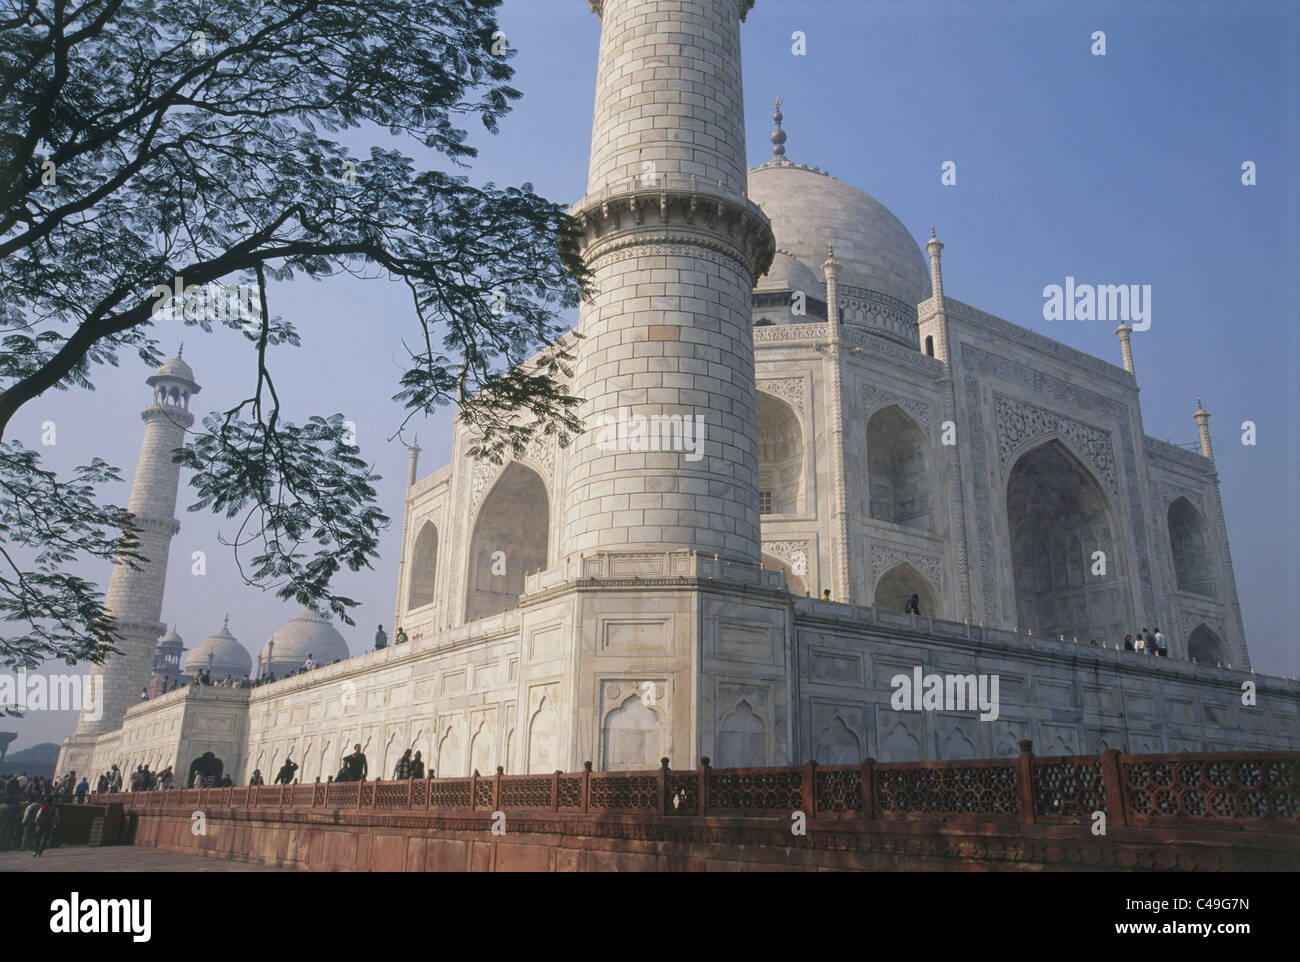 Photograph of the Taj Mahal in India Stock Photo